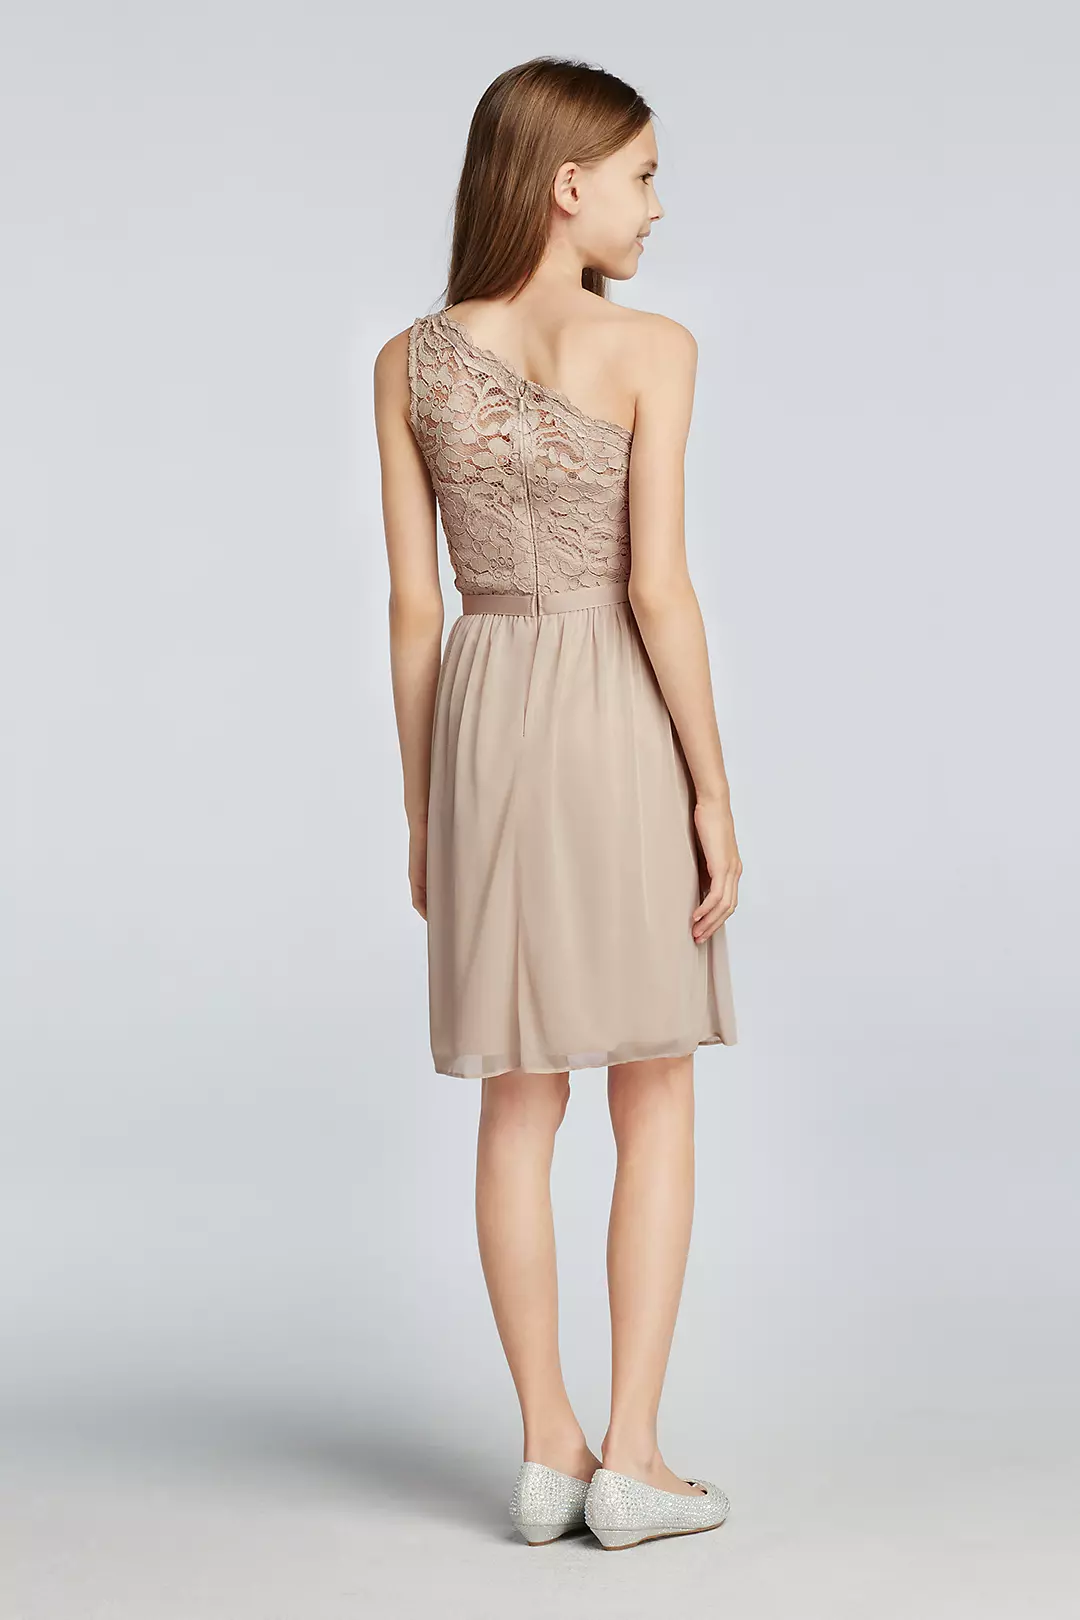 Short One Shoulder Lace Bodice Dress Image 2